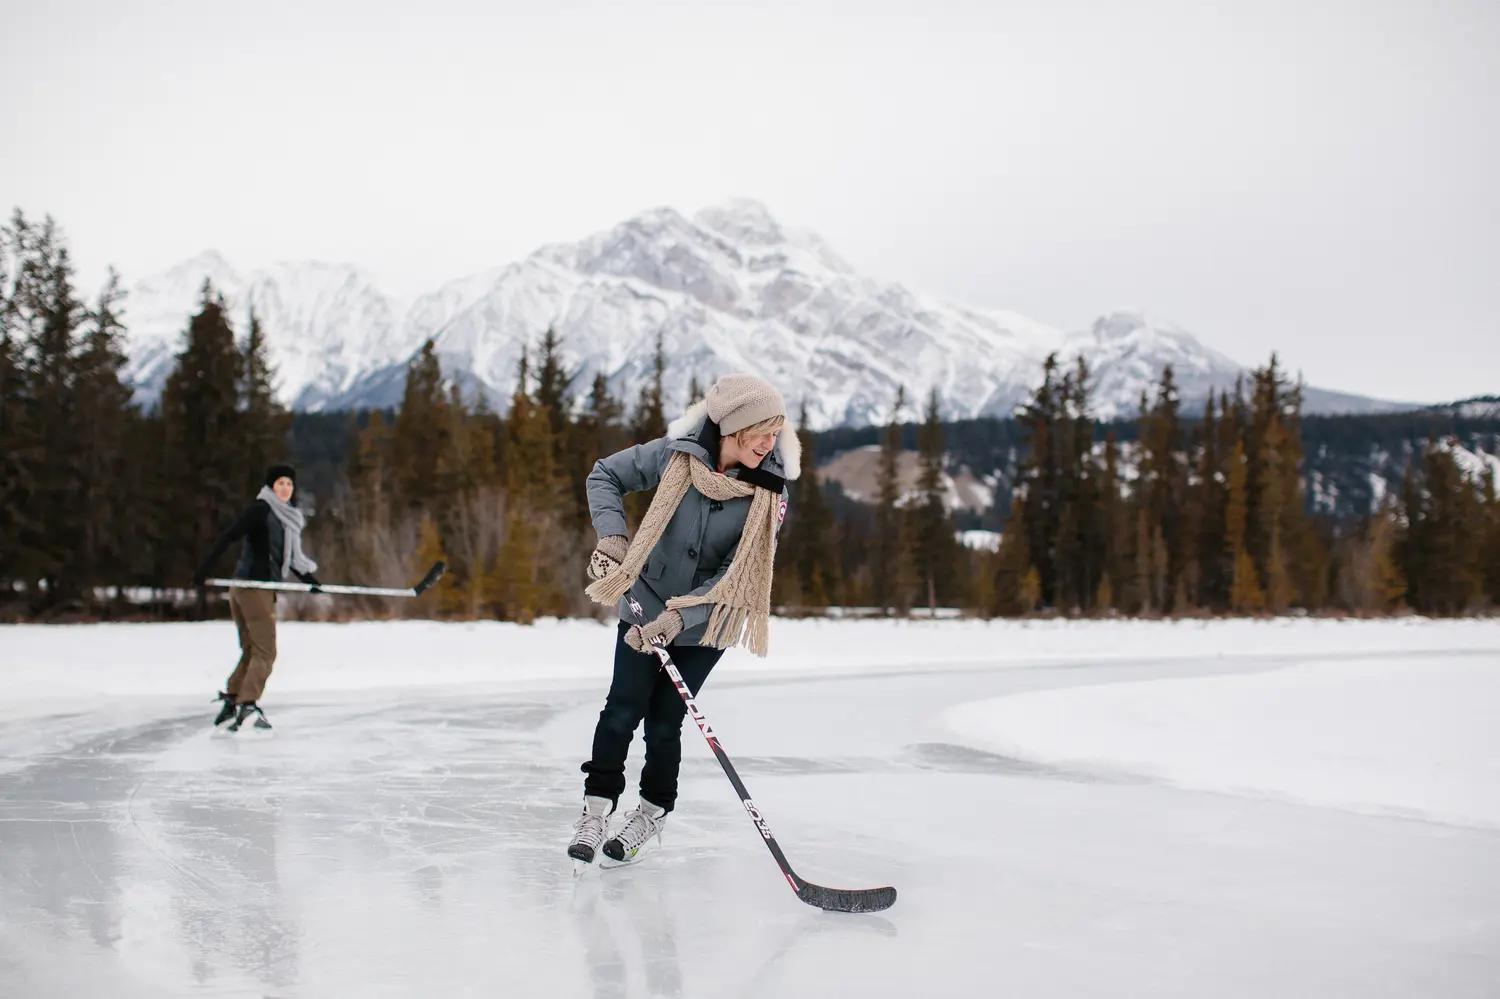 People ice skating on Mildred Lake in Jasper, Canada